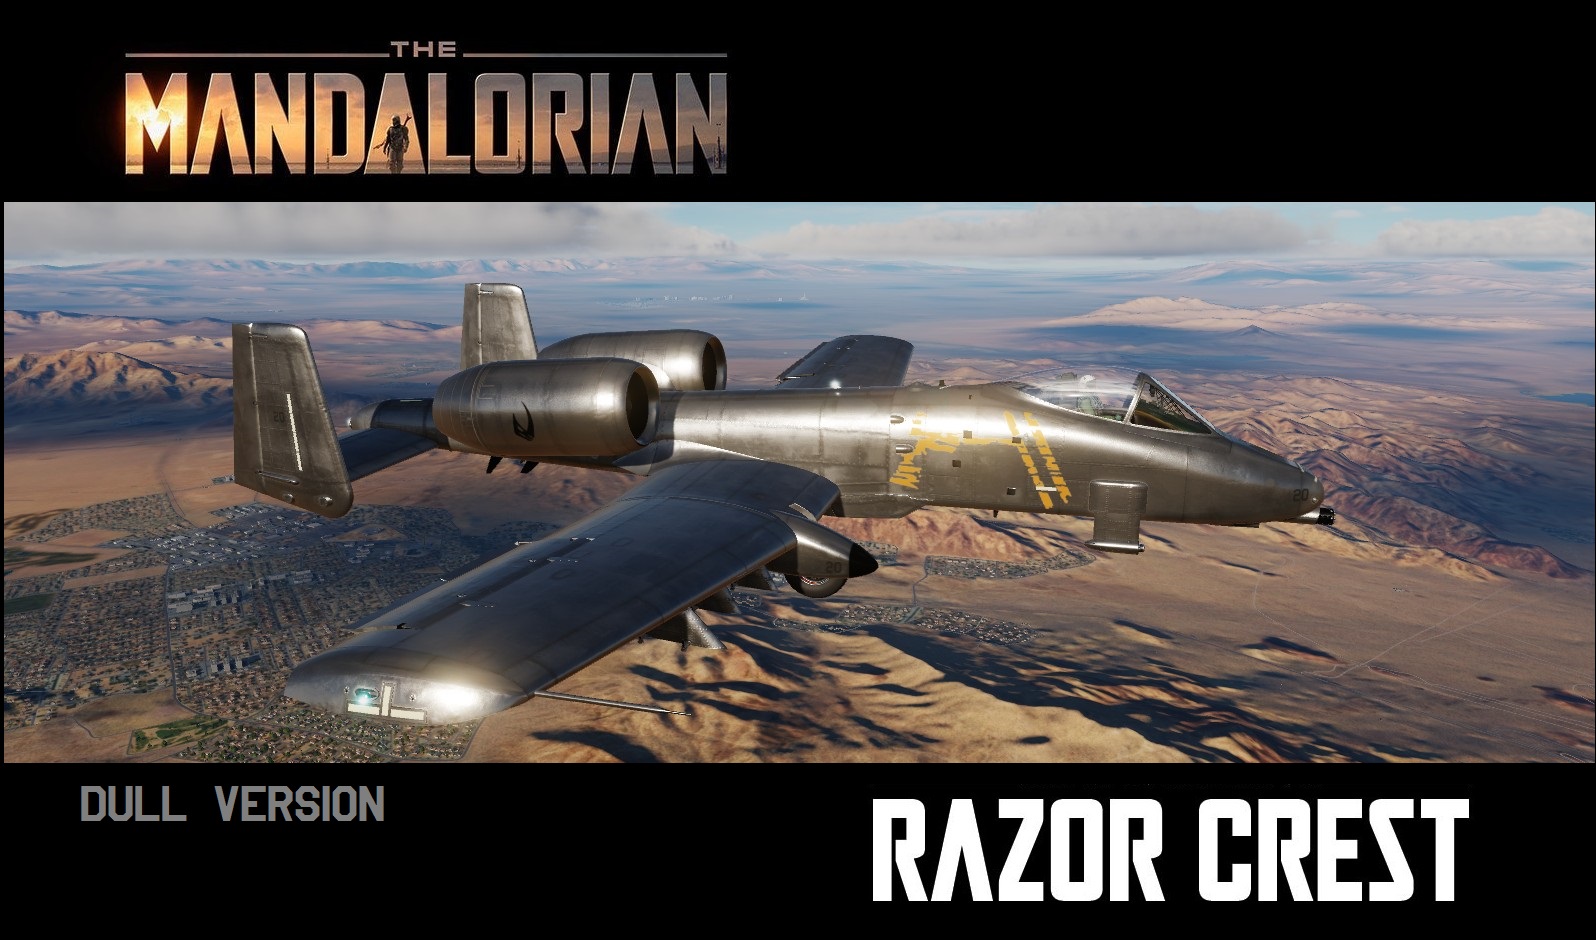 A-10 RAZOR CREST - Star Wars - The Mandalorian 